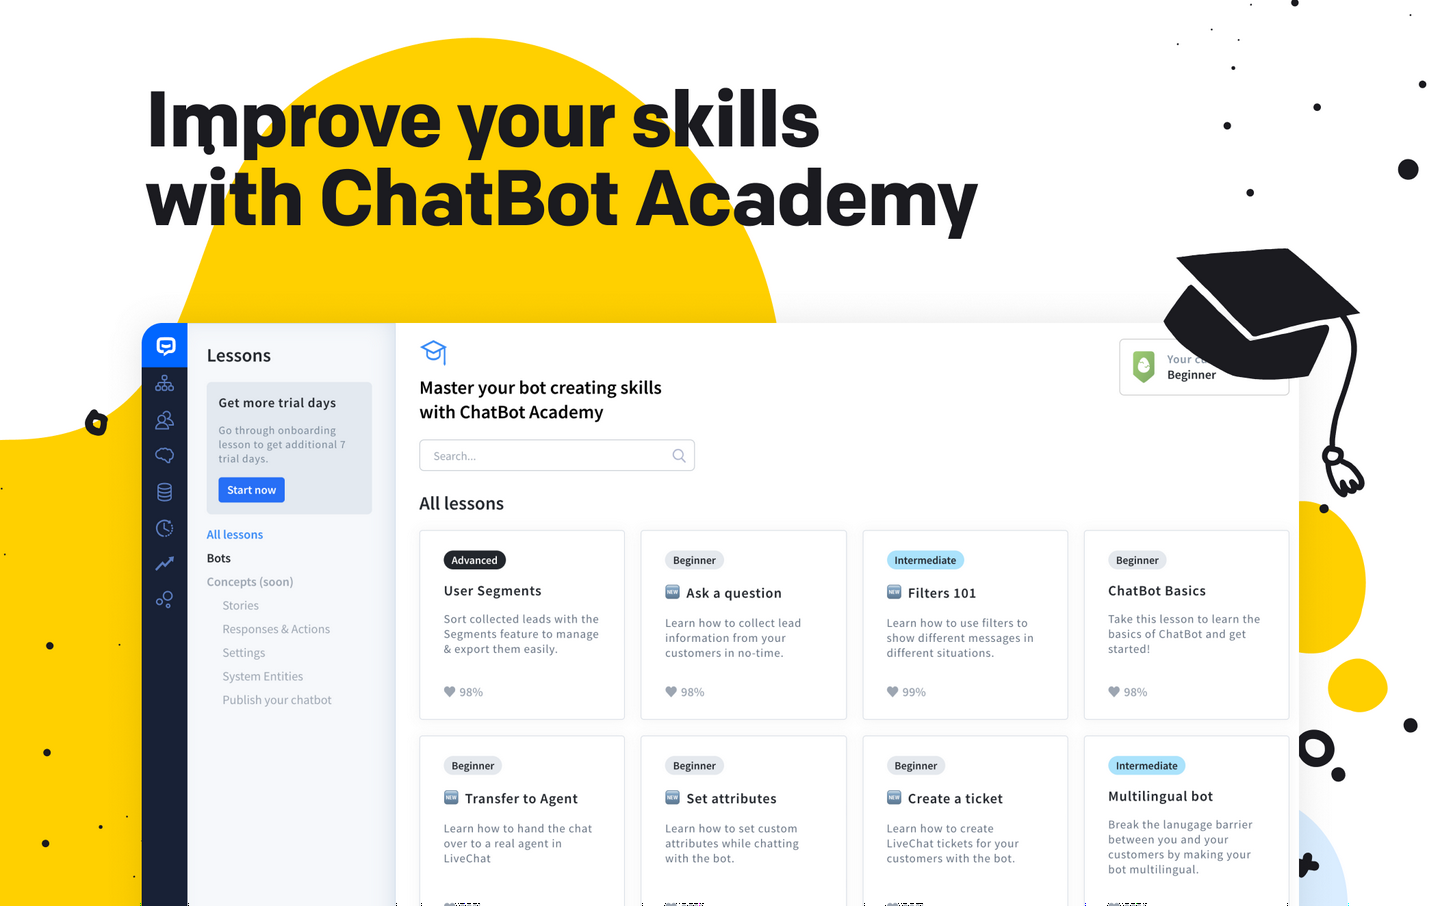 ChatBot Academy